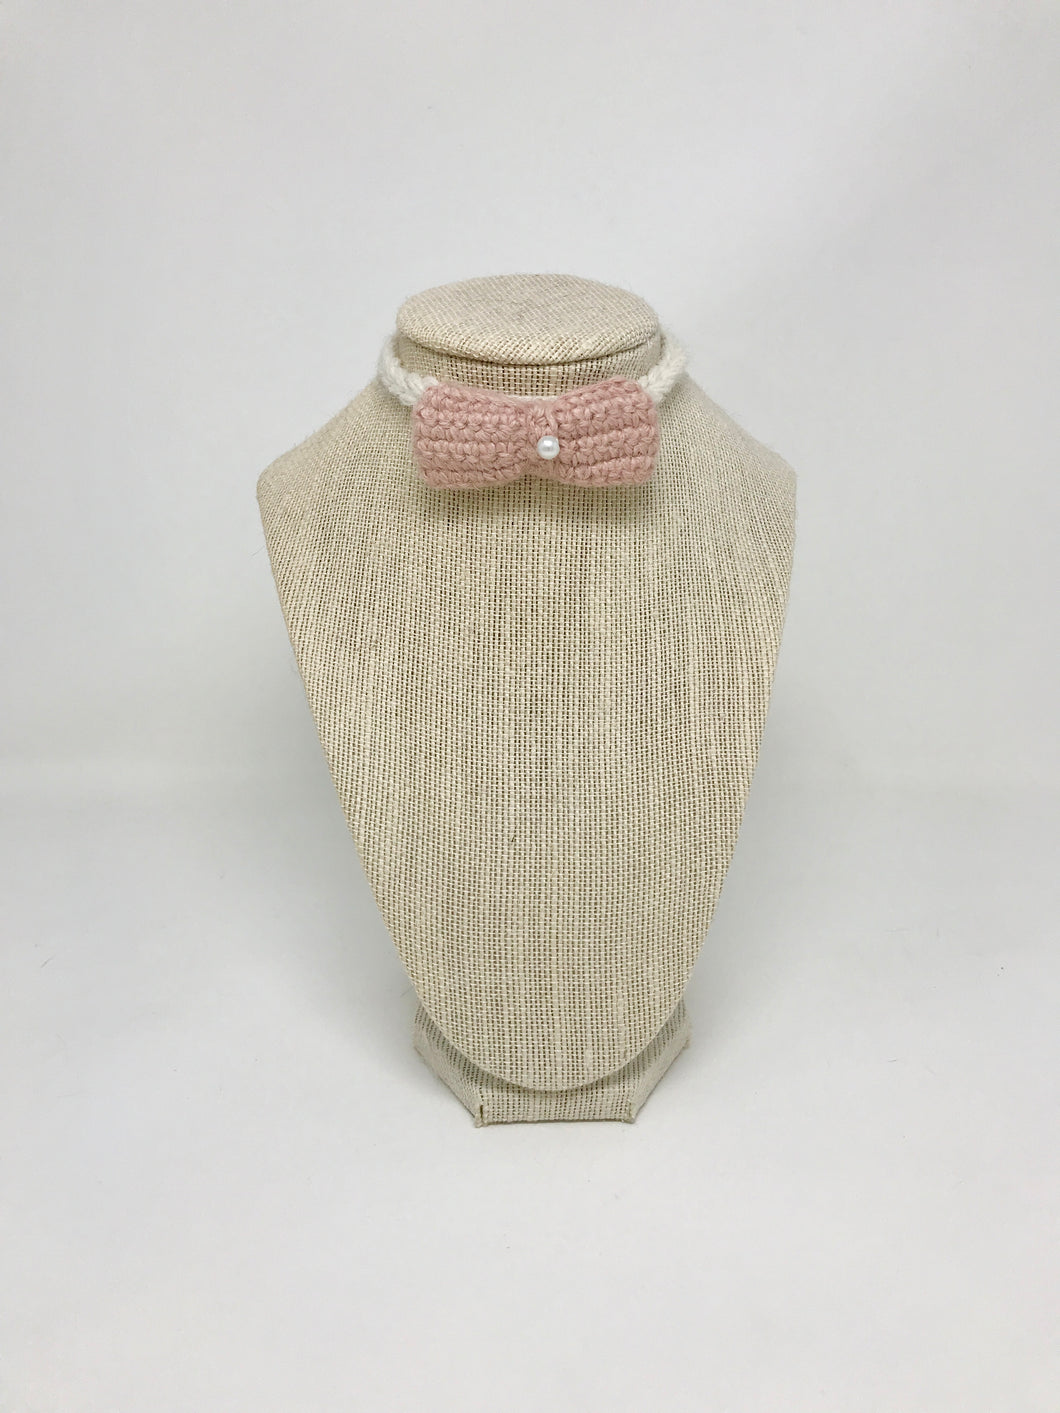 Mini Pet Bow Tie Collar -Blush Pink/Off-white